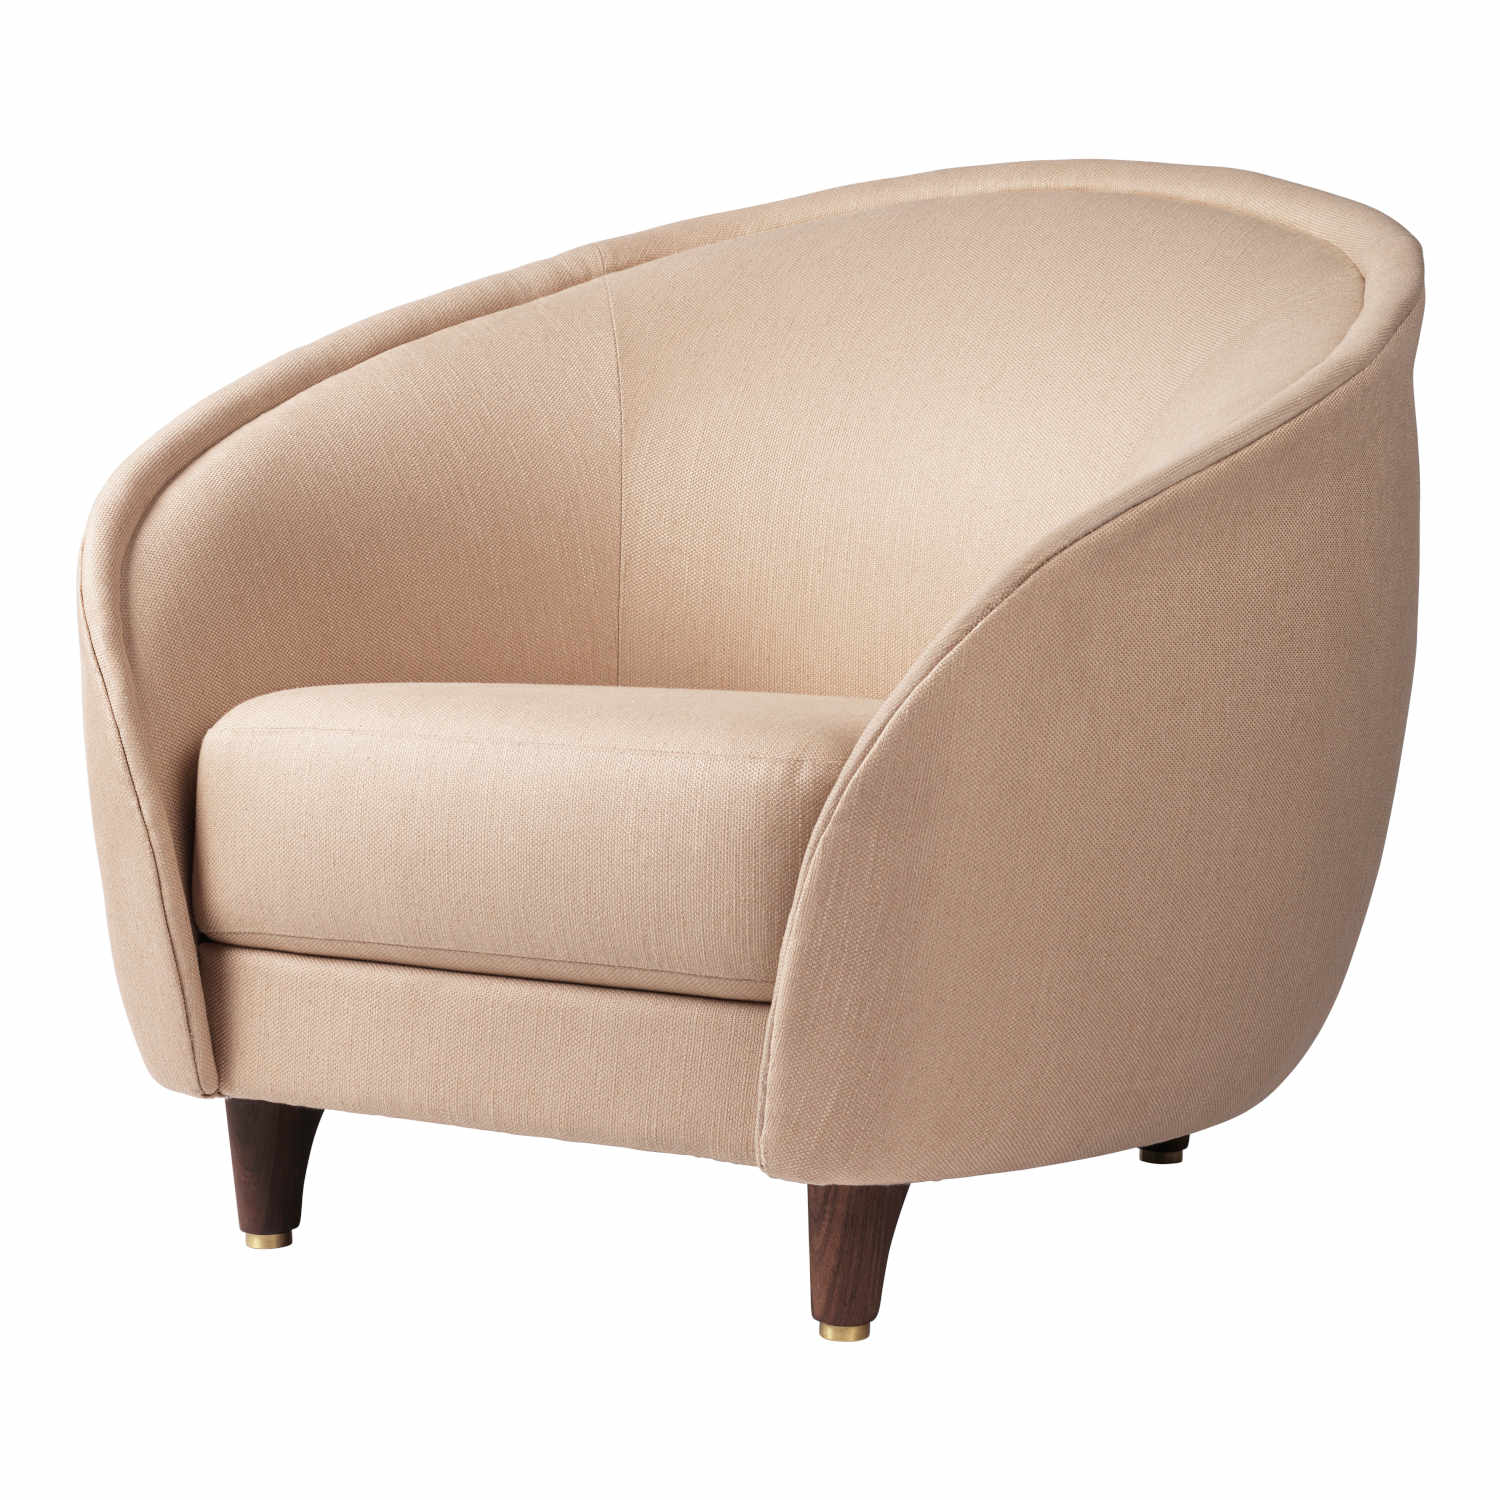 Revers Lounge Chair Sessel, Bezug kvadrat remix 0133 stoff, Untergestell Wood Base american walnut (geölt) von GUBI